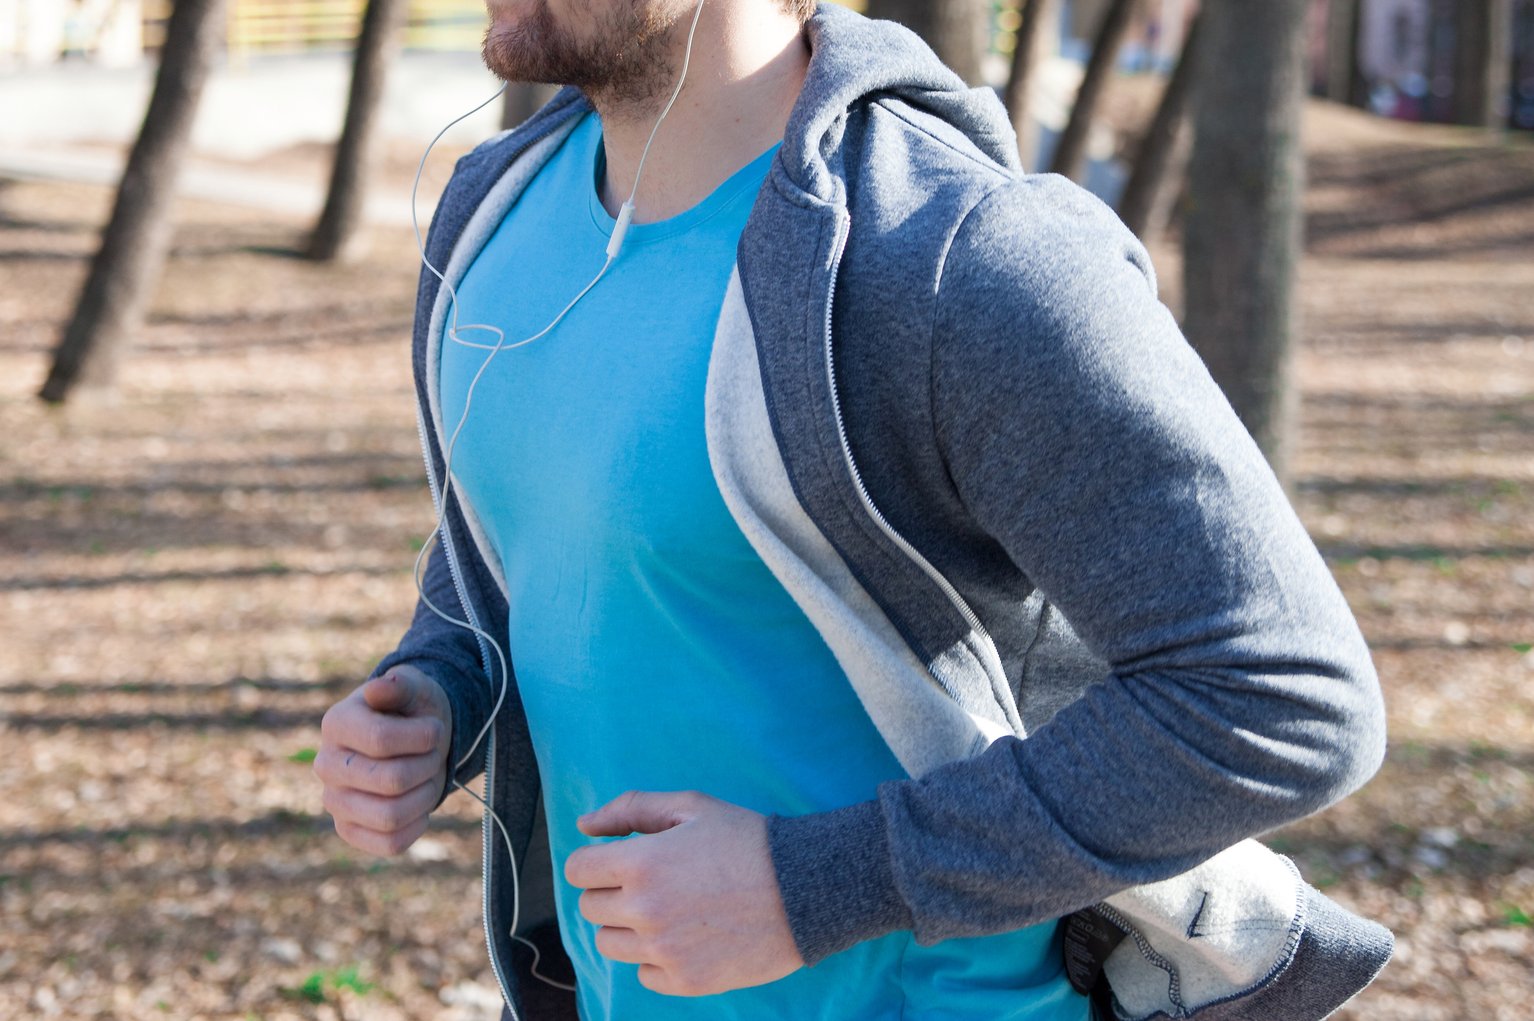 A man jogging listening to headphones